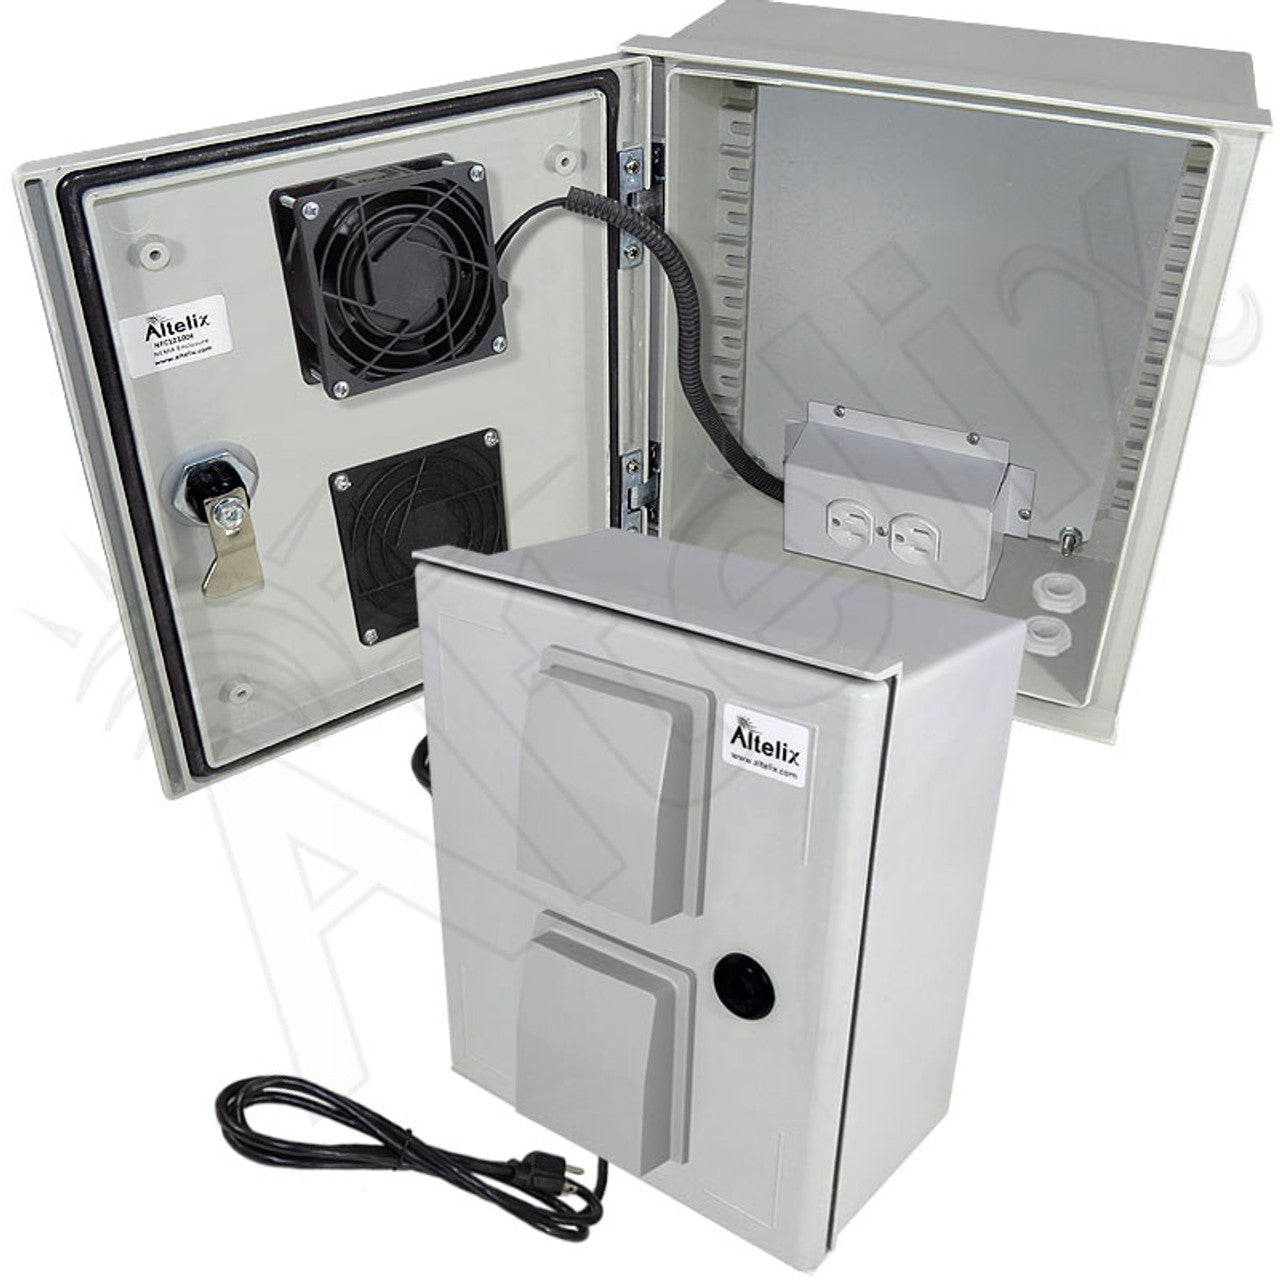 Altelix Vented Fiberglass Weatherproof NEMA Enclosure with Cooling Fan, 120 VAC Outlets & Power Cord